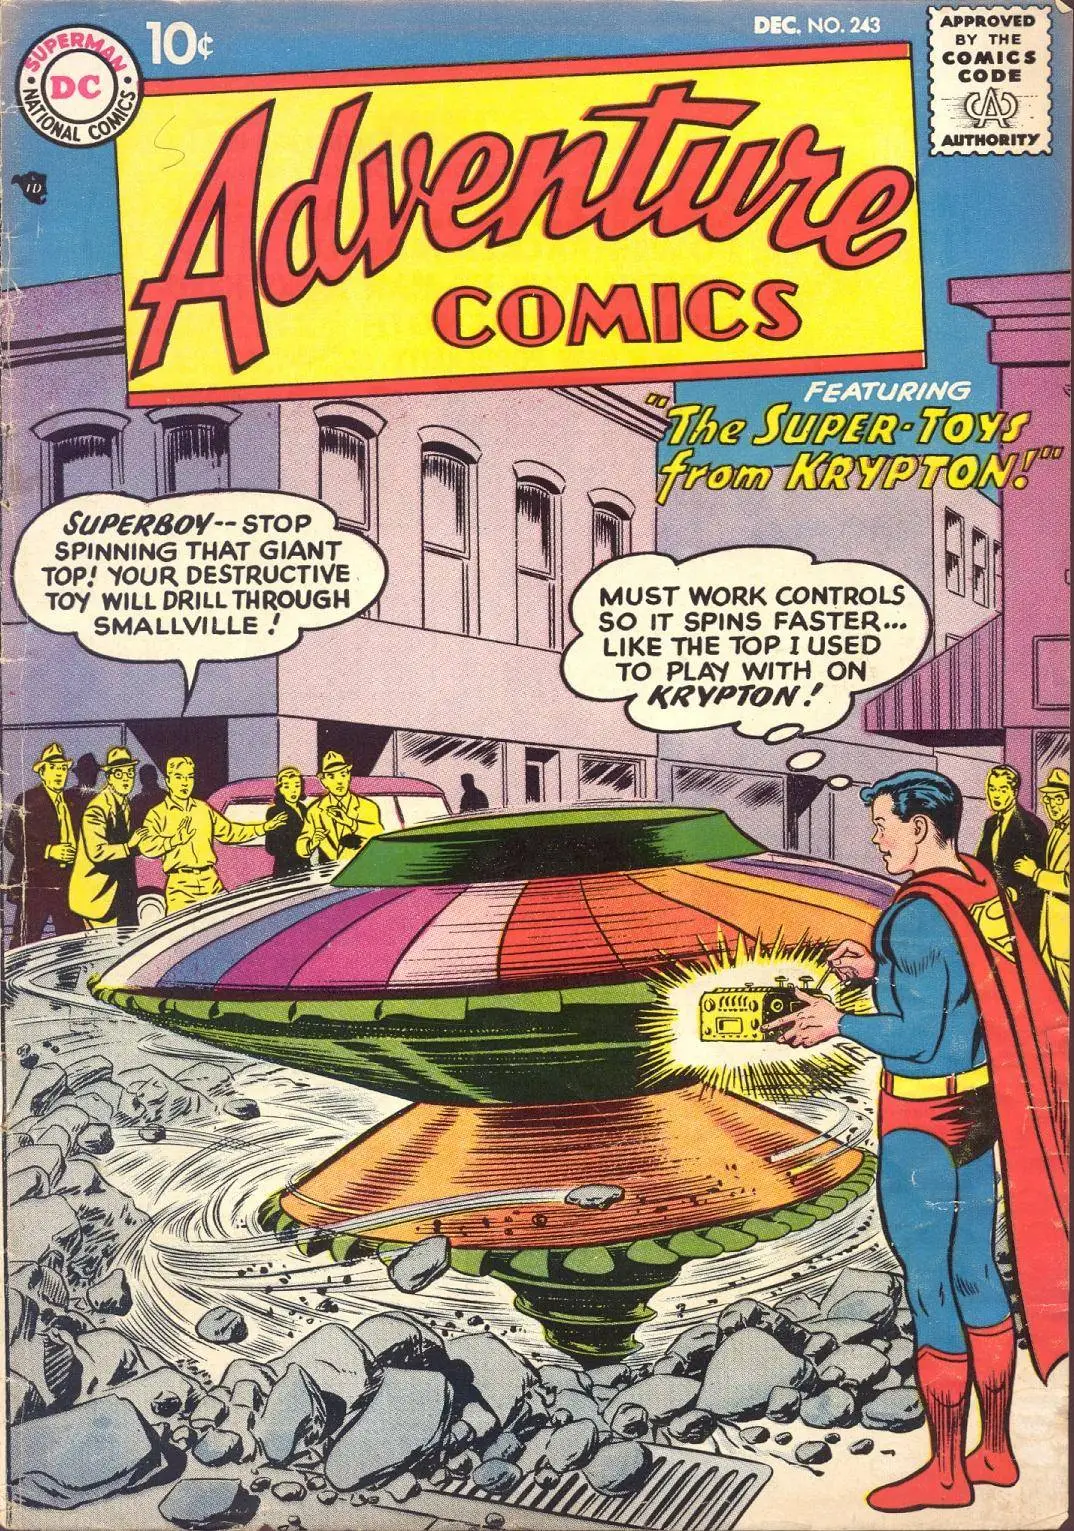 Adventure Comics 1957-12 243